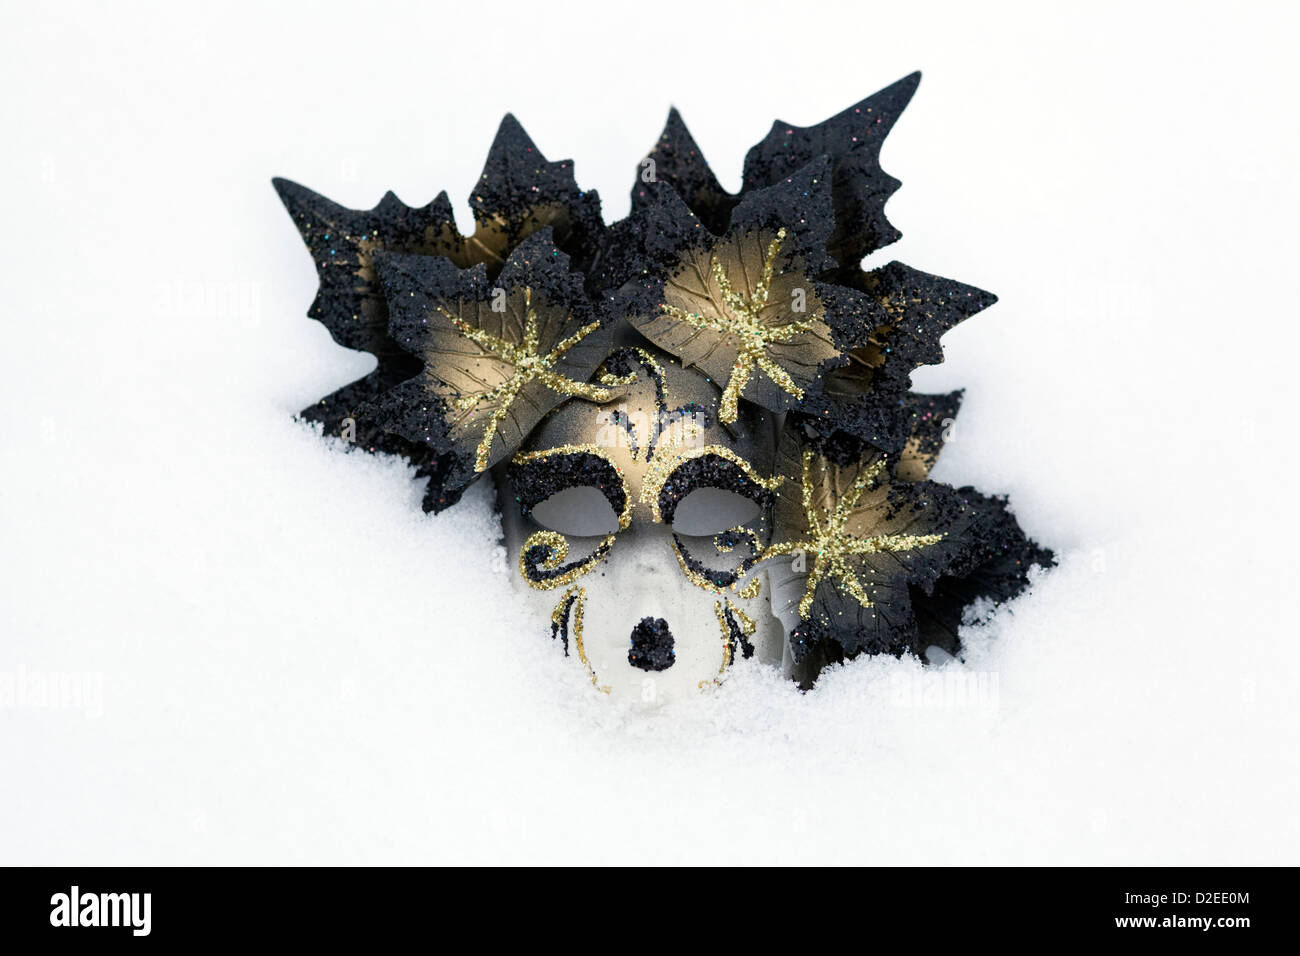 Maschera Veneziana nella neve Foto Stock